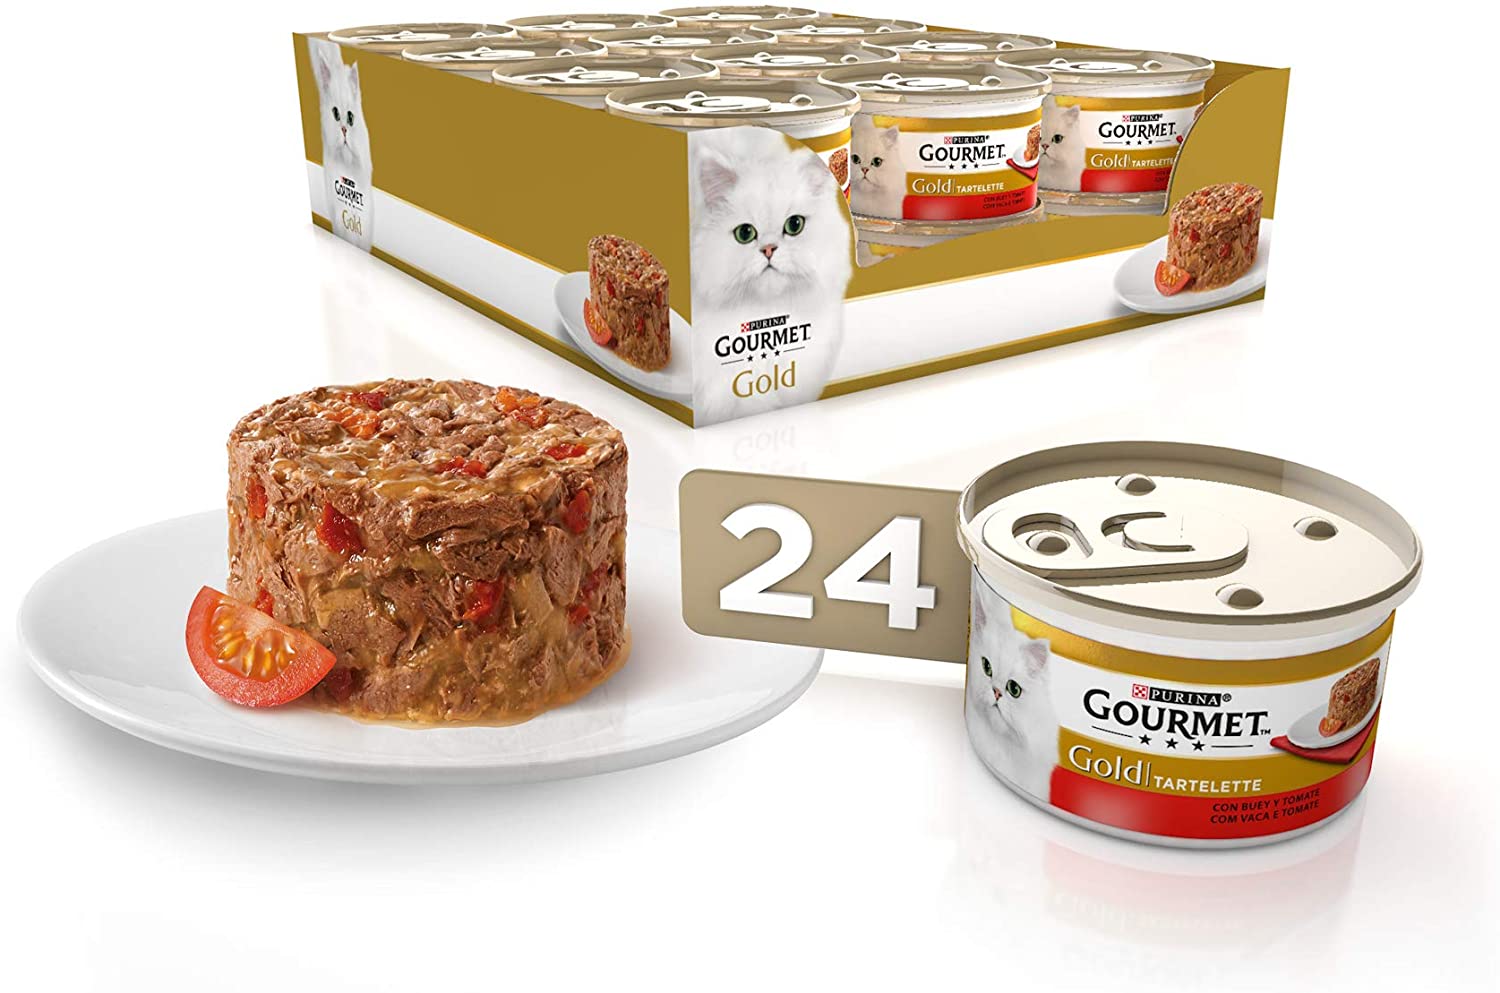  Purina Gourmet Gold Tartalette comida para gatos con Buey y Tomate 24 x 85 g 